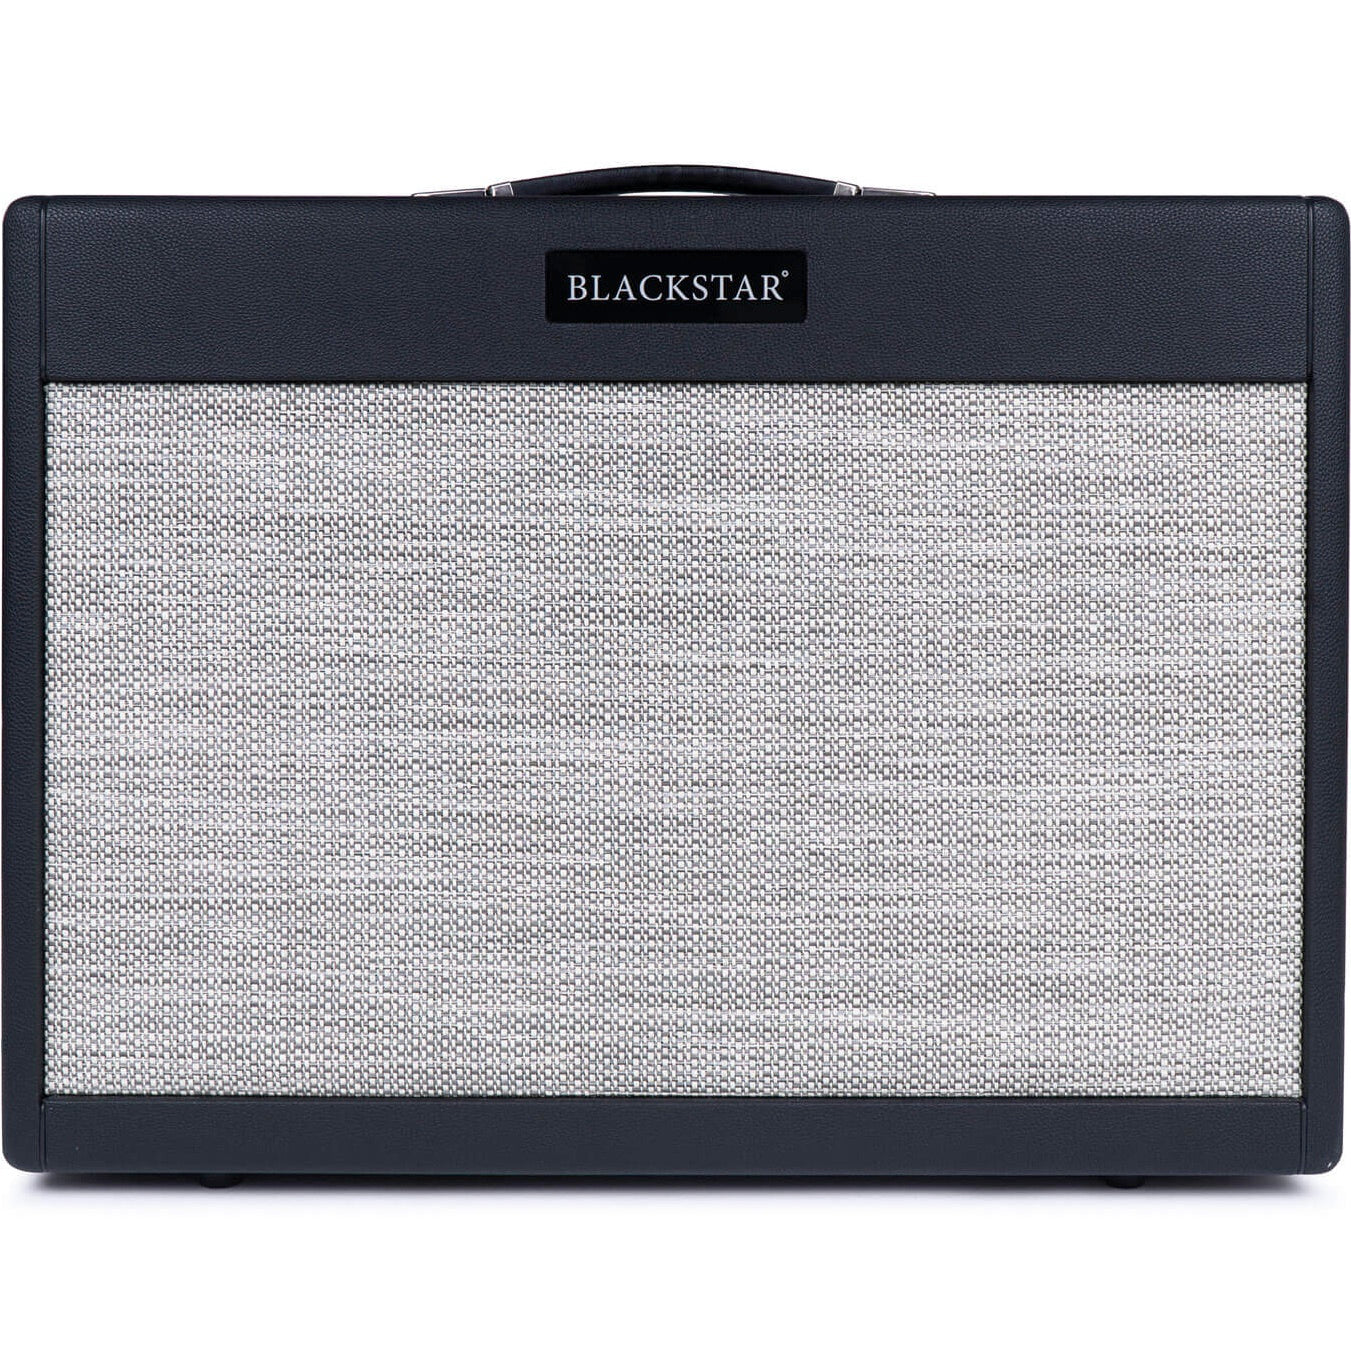 Blackstar St. James 50 6L6C 212 50-watt 2x12" Tube Combo Amp | Music Experience | Shop Online | South Africa